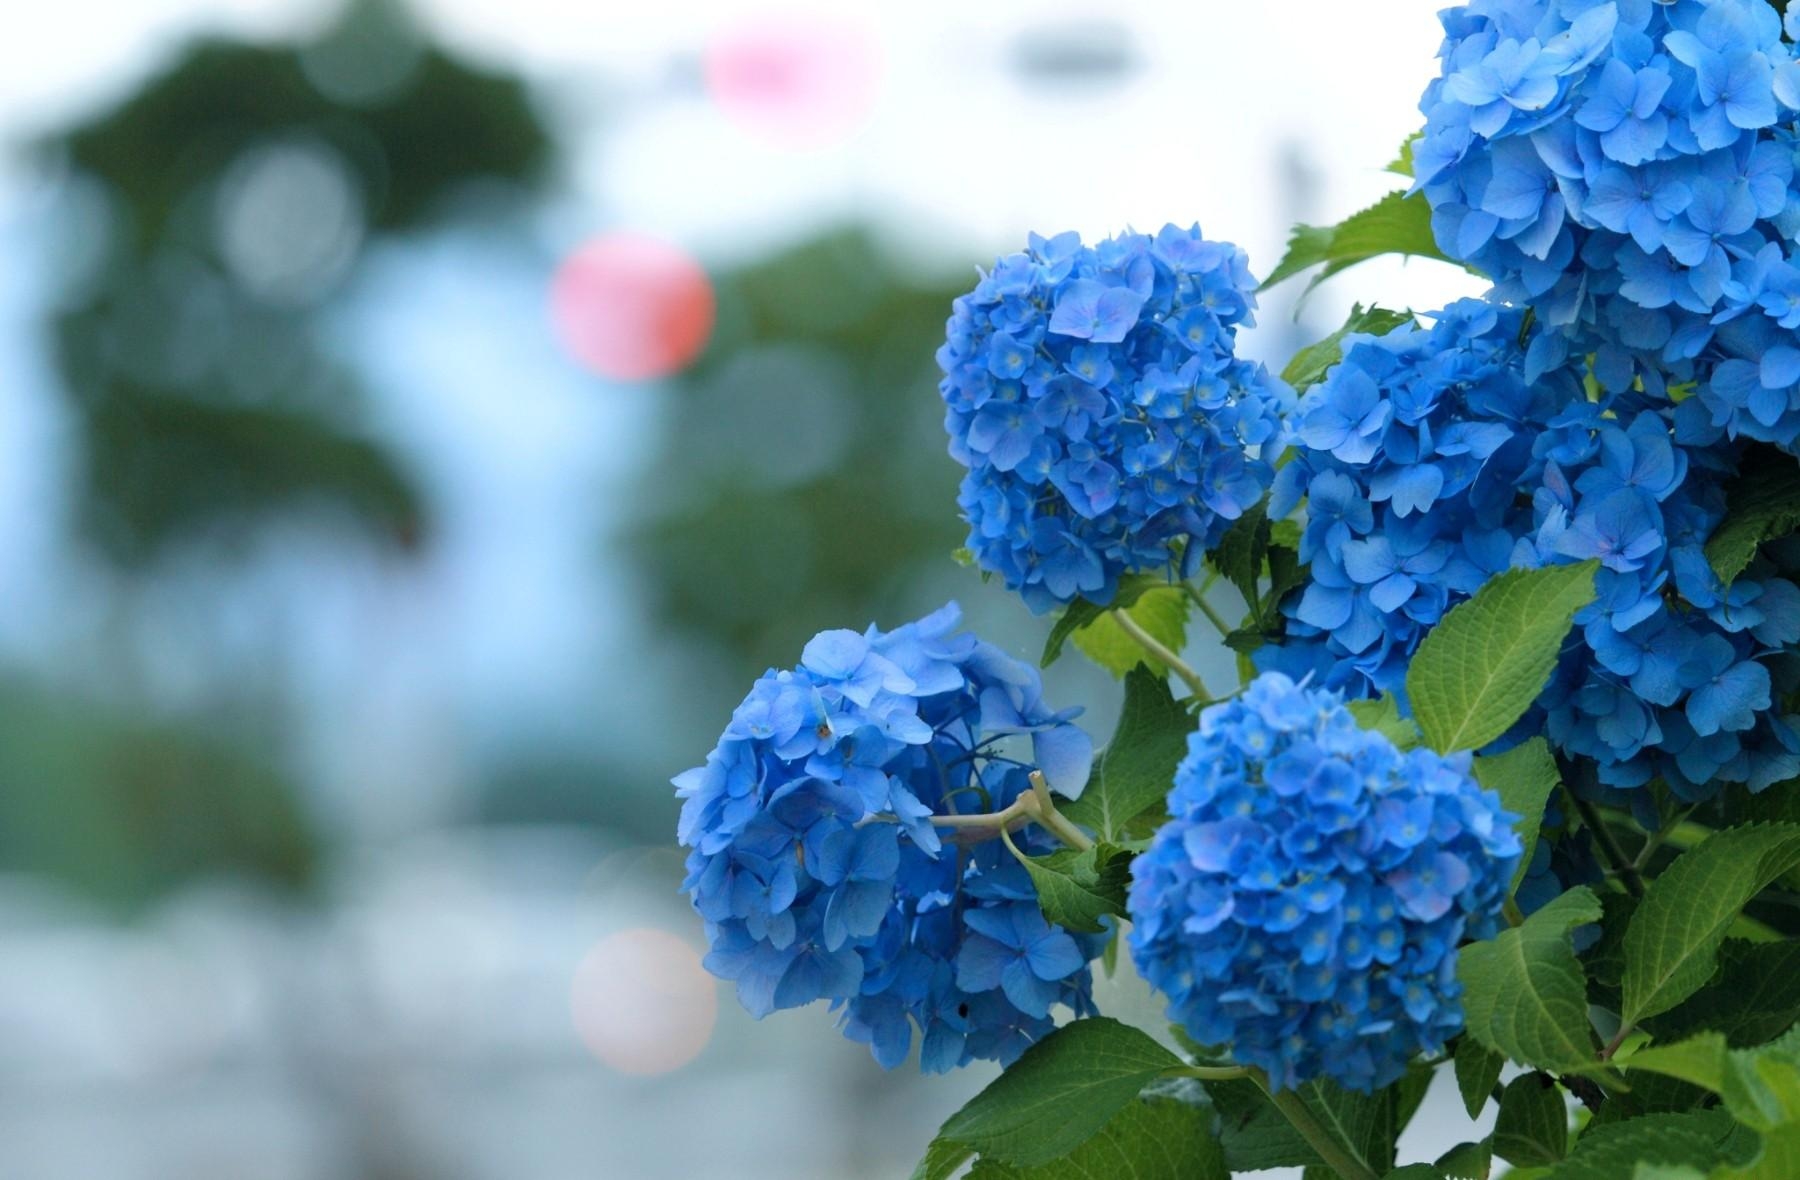 hydrangea, smooth, green, flowers, blue, blur, bloom, flowering